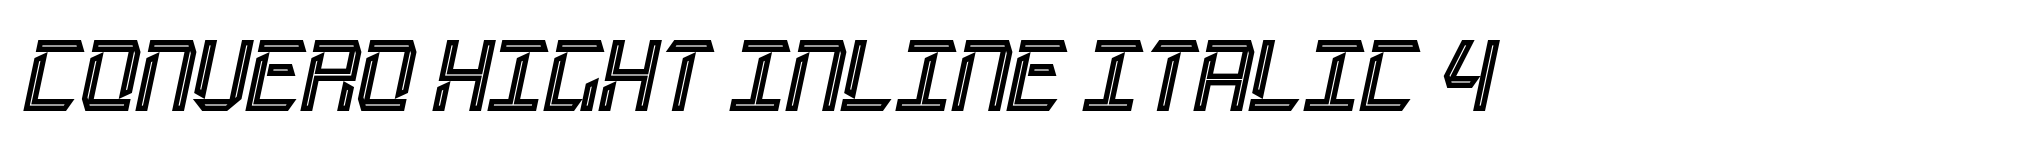 Convero Hight Inline Italic 4 image